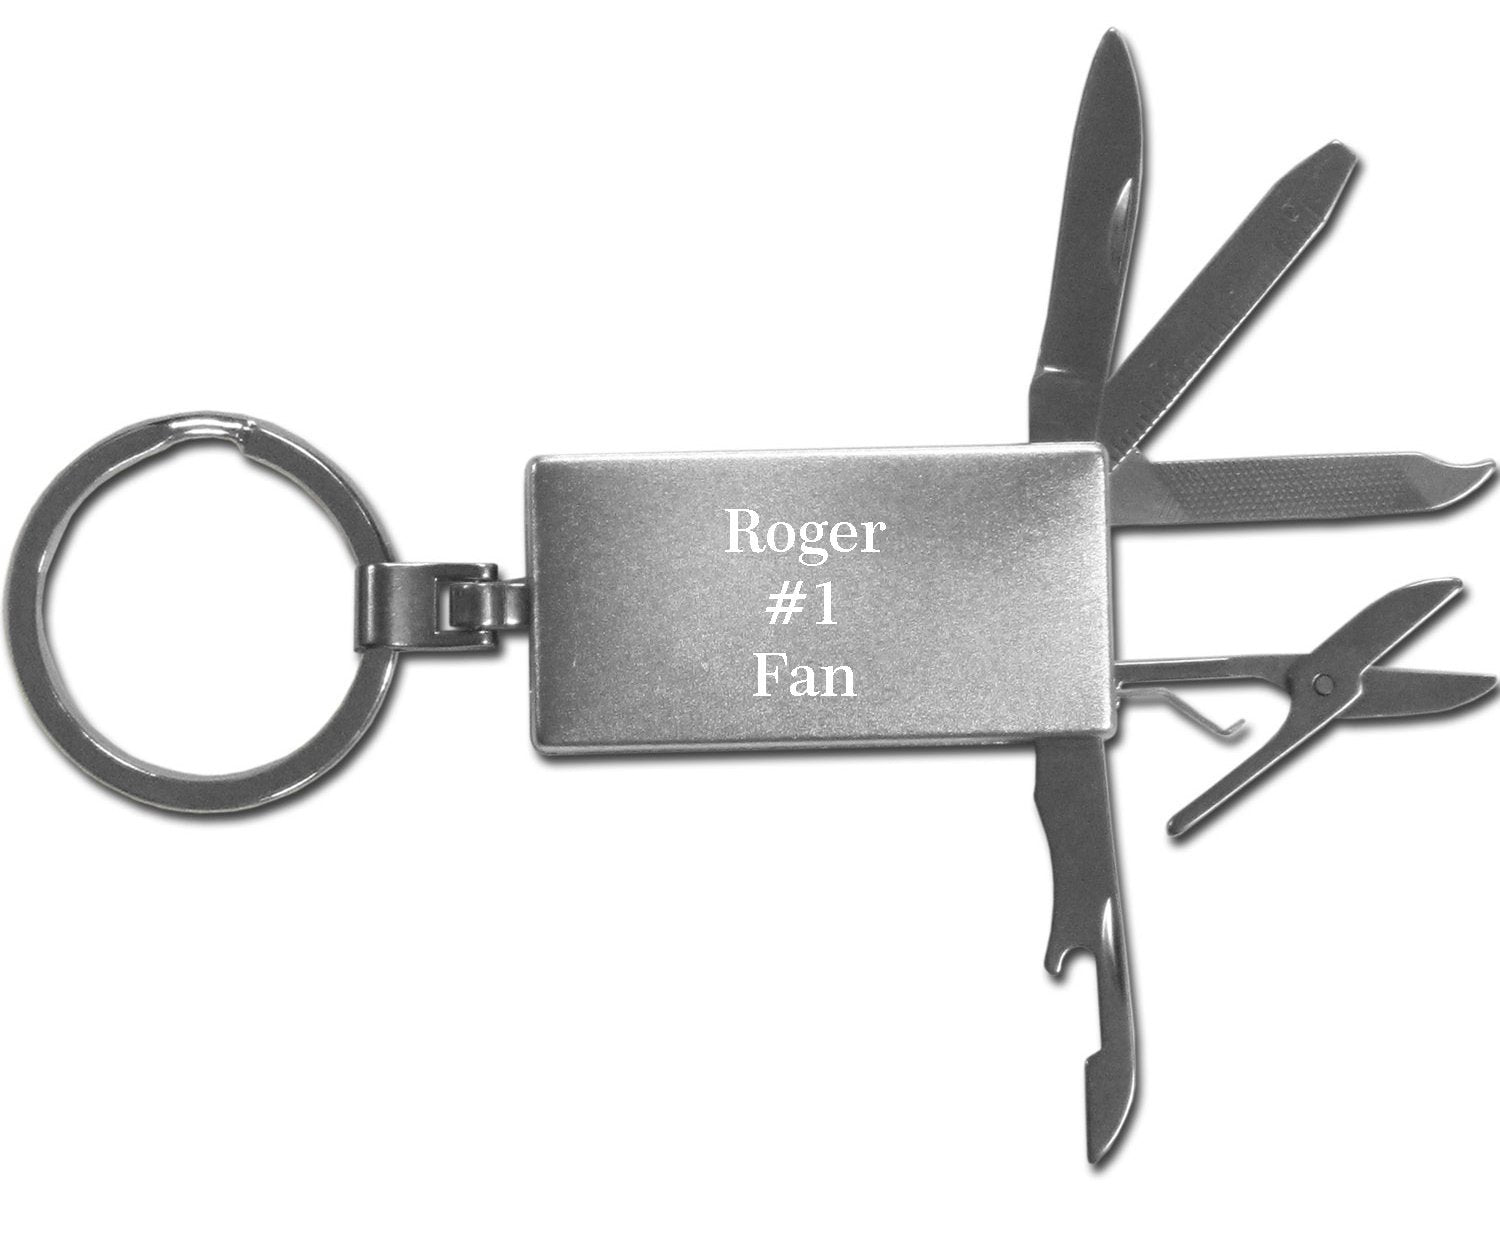 Atlanta Falcons Multi-tool Key Chain